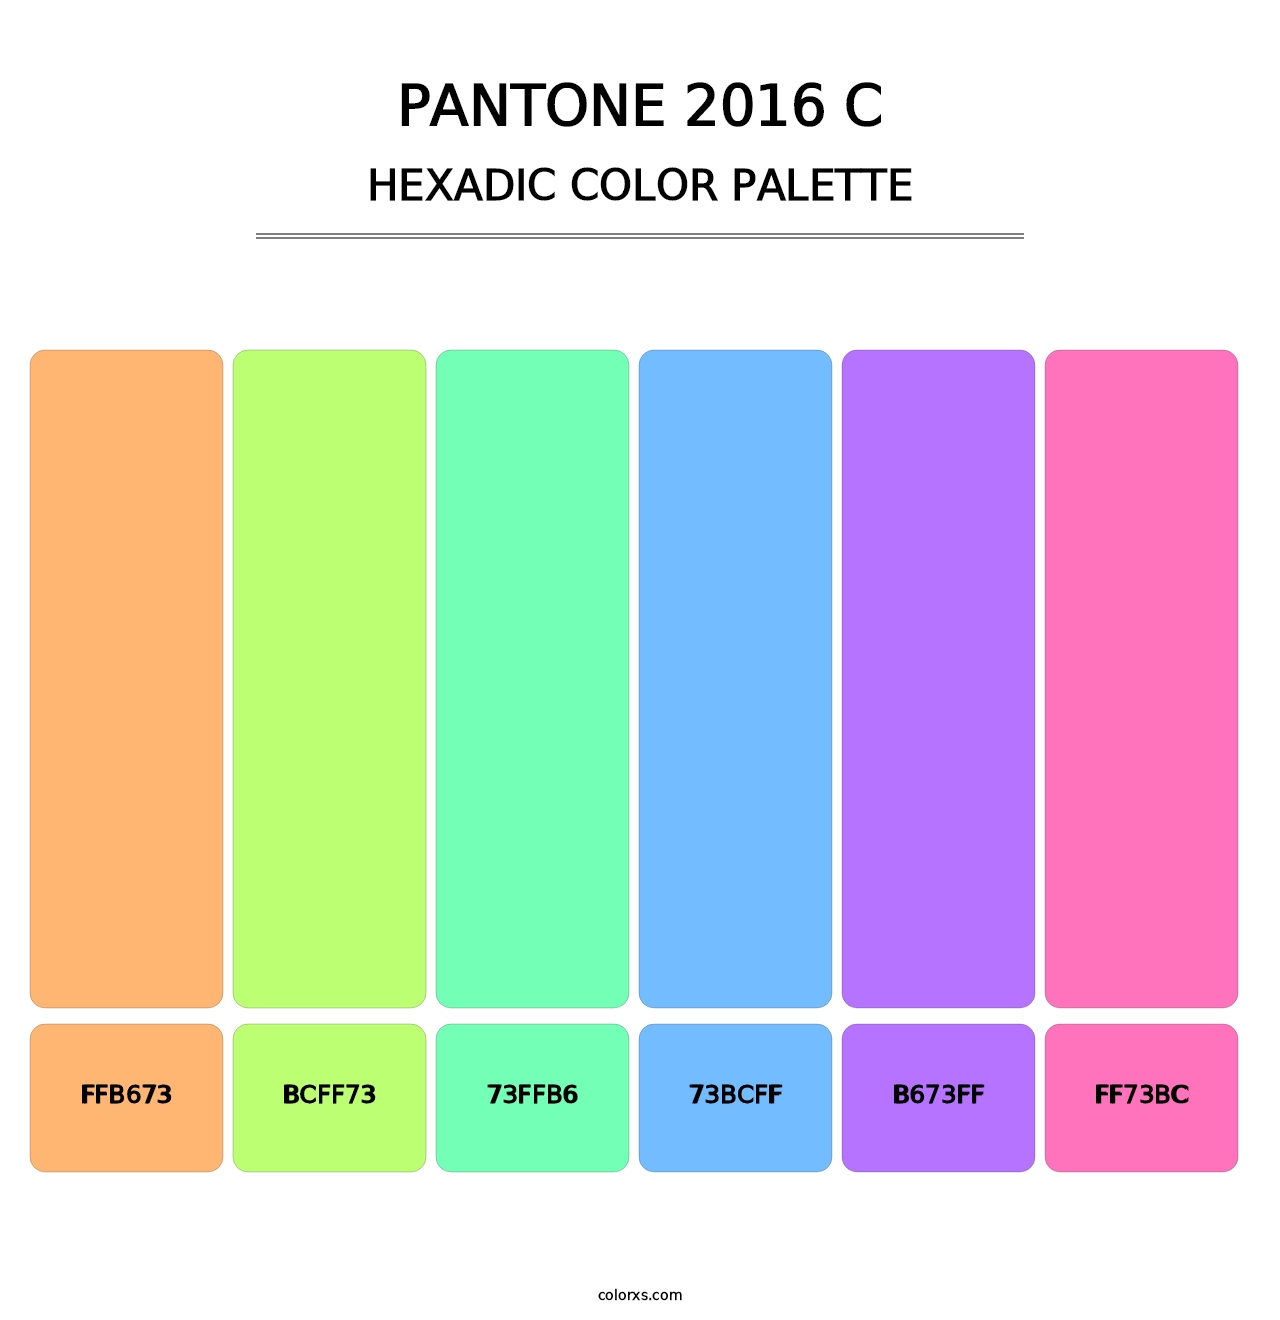 PANTONE 2016 C - Hexadic Color Palette